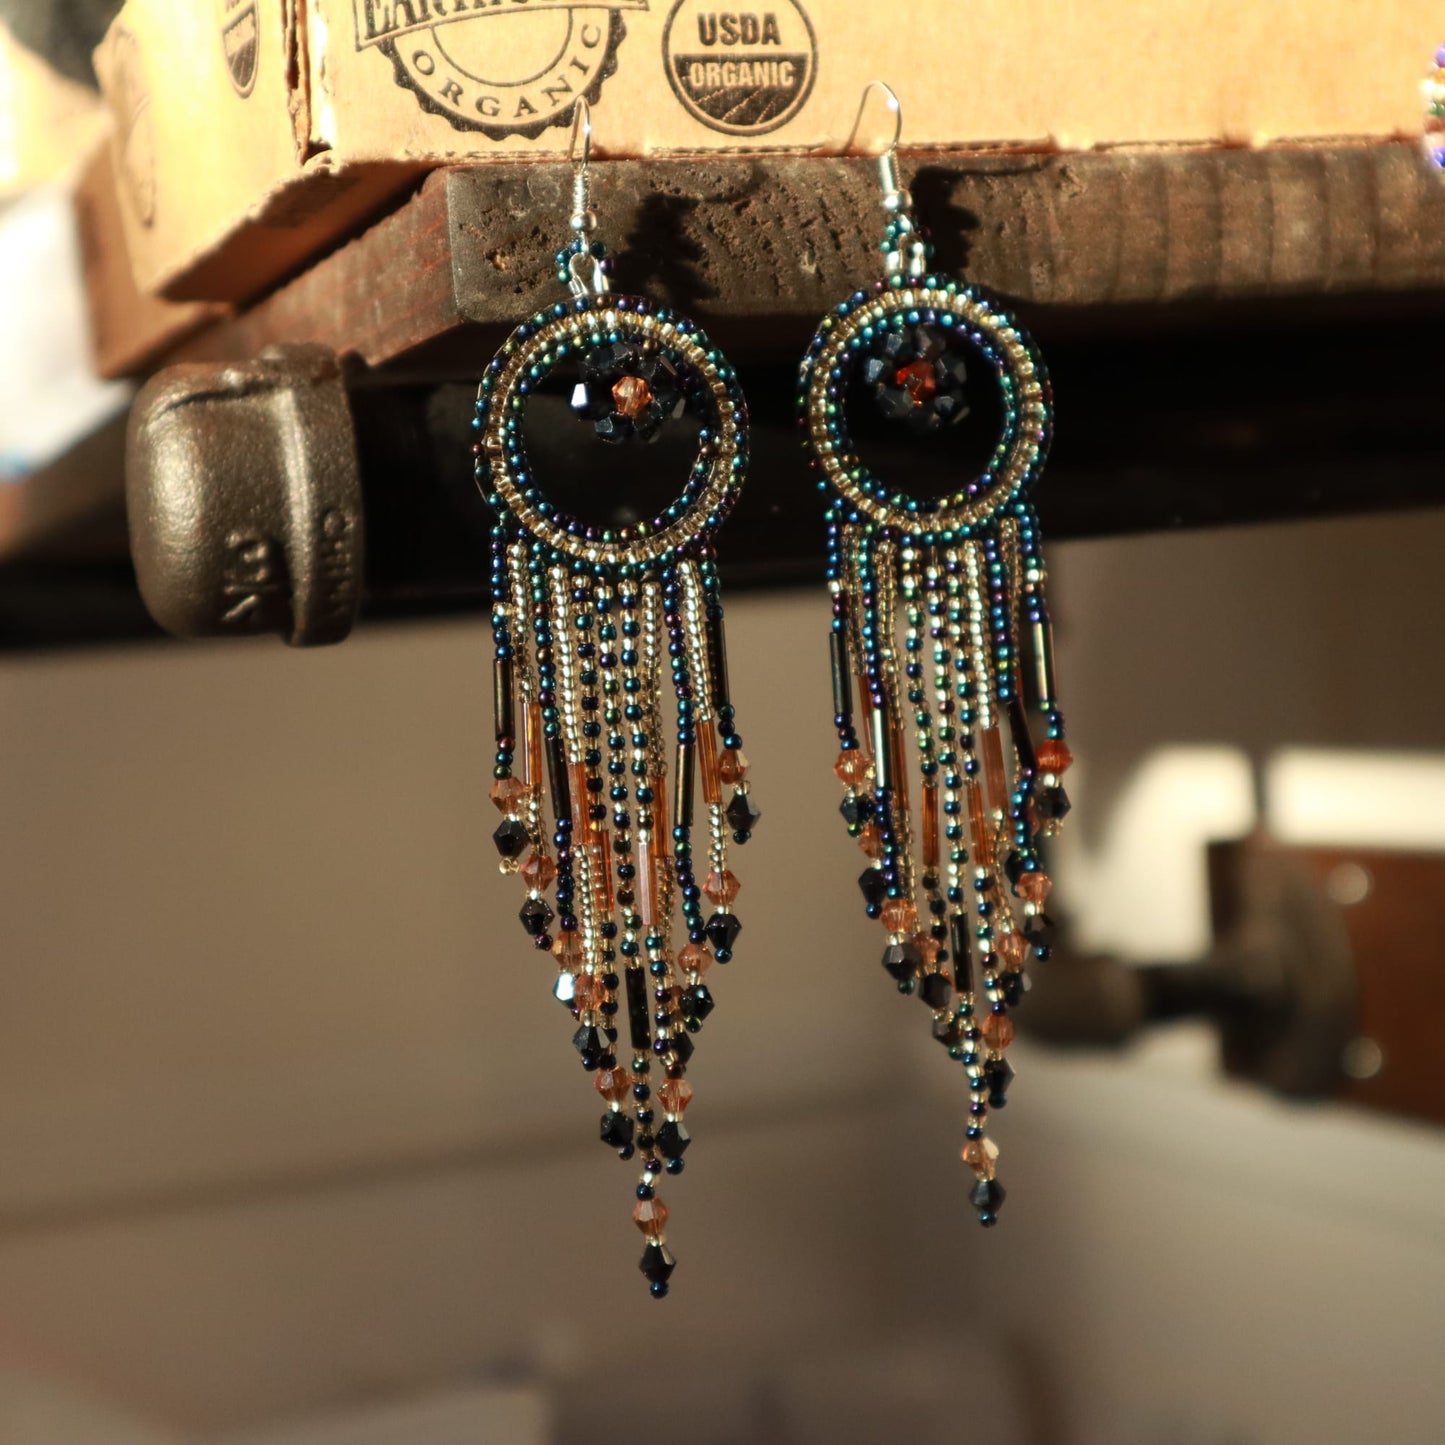 Beaded fringe earrings with metallic peacock seed bead earrings beadwork jewelry